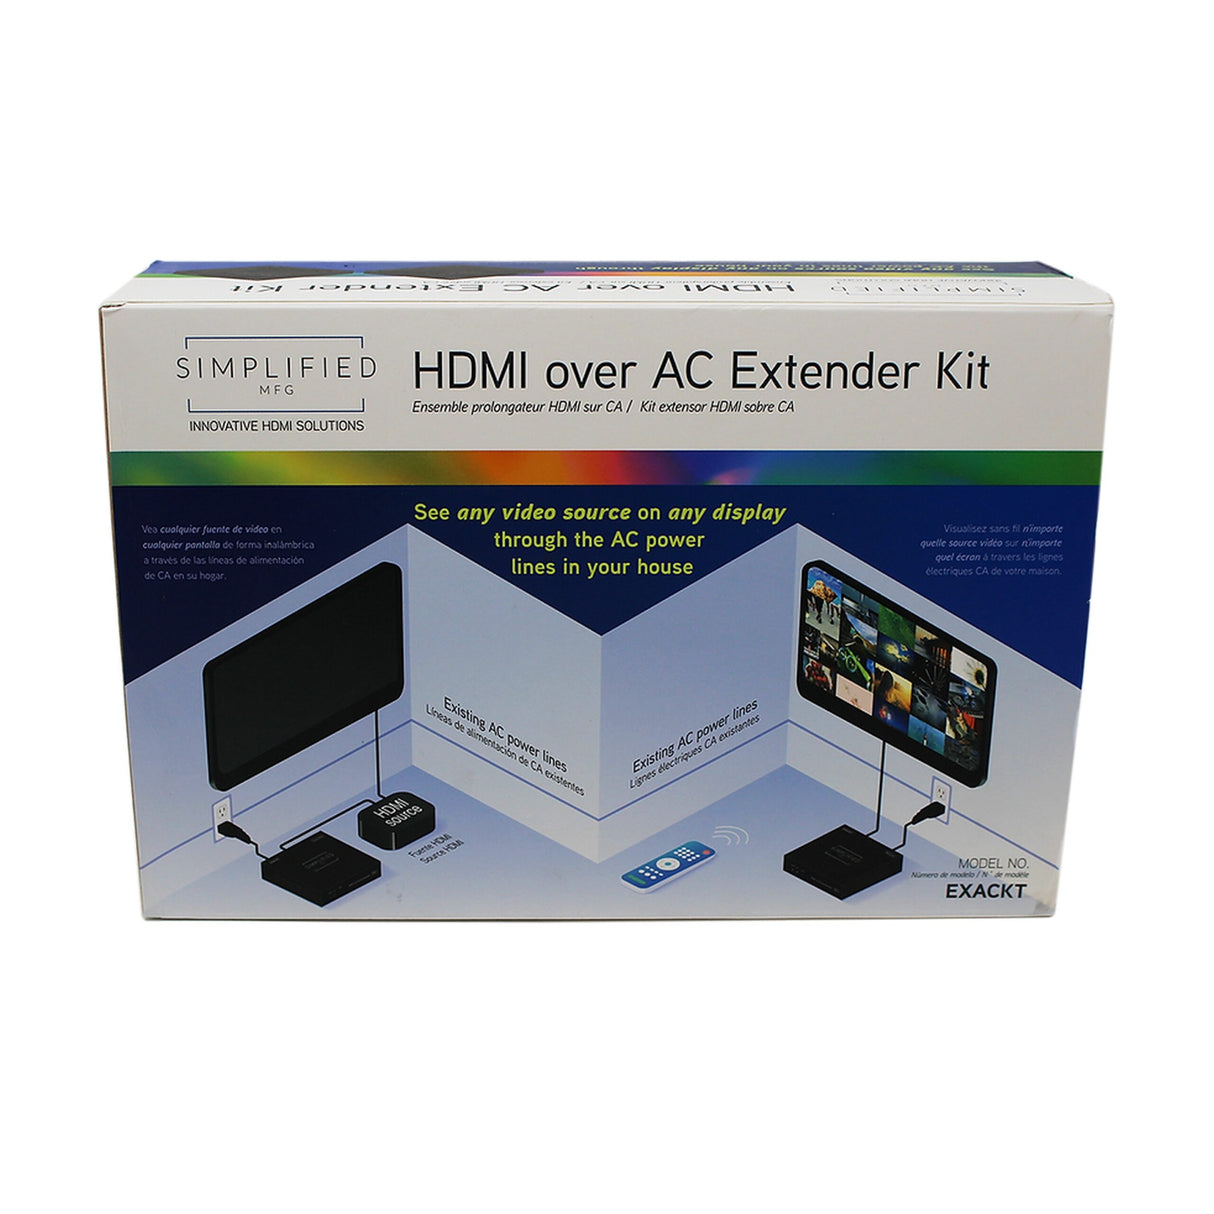 Simplified MFG EXACKT Extender over AC Kit